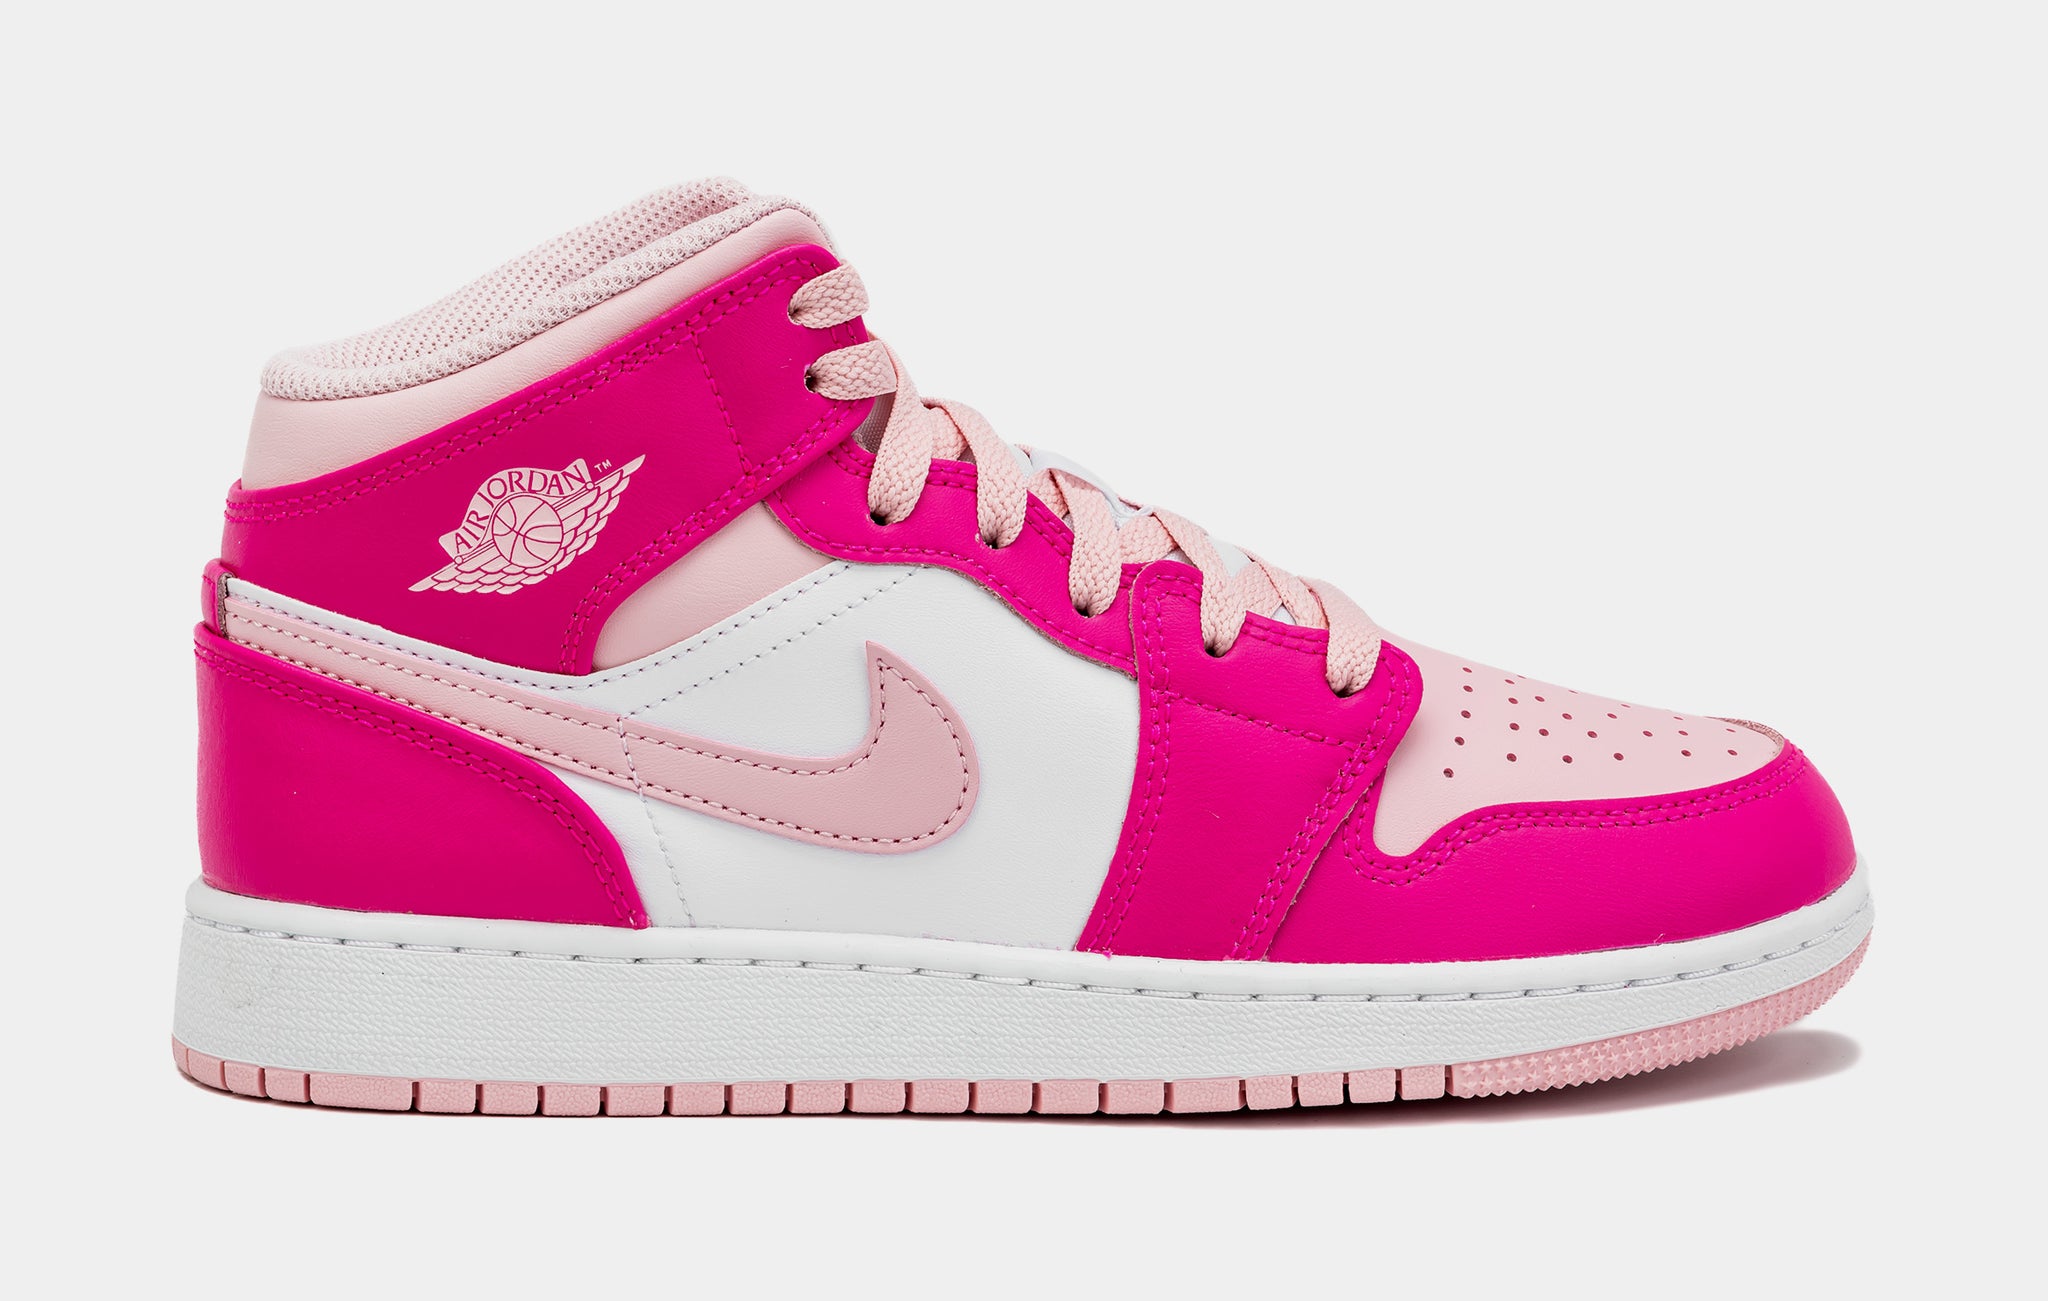 Air Jordan 1 Retro Mid Medium Soft Pink Grade School Lifestyle Shoes (Pink)